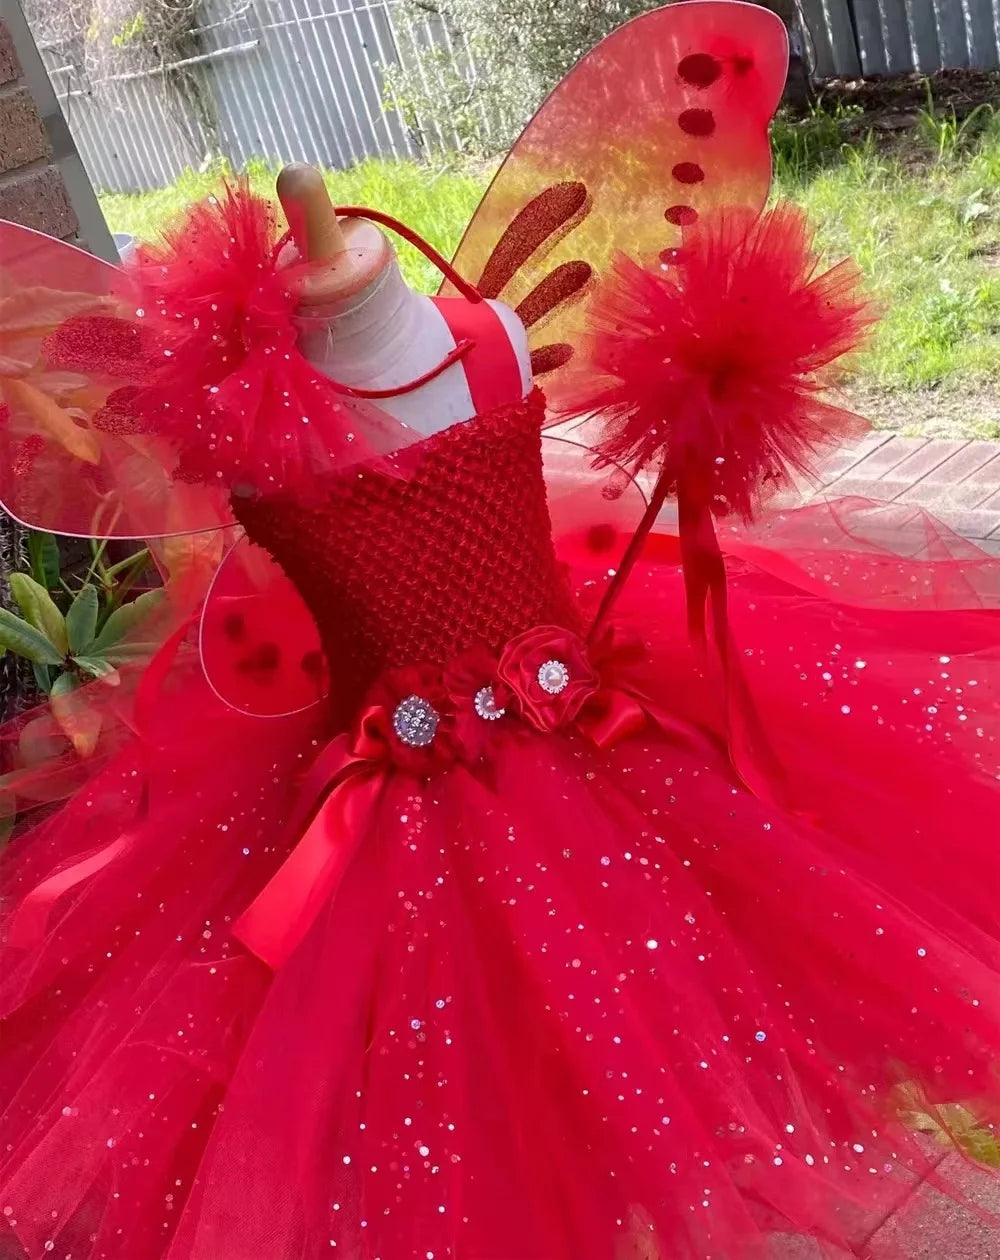 Fairy Tutu Dresses Outfit Cosplay Party Costume by Baby Minaj Cruz